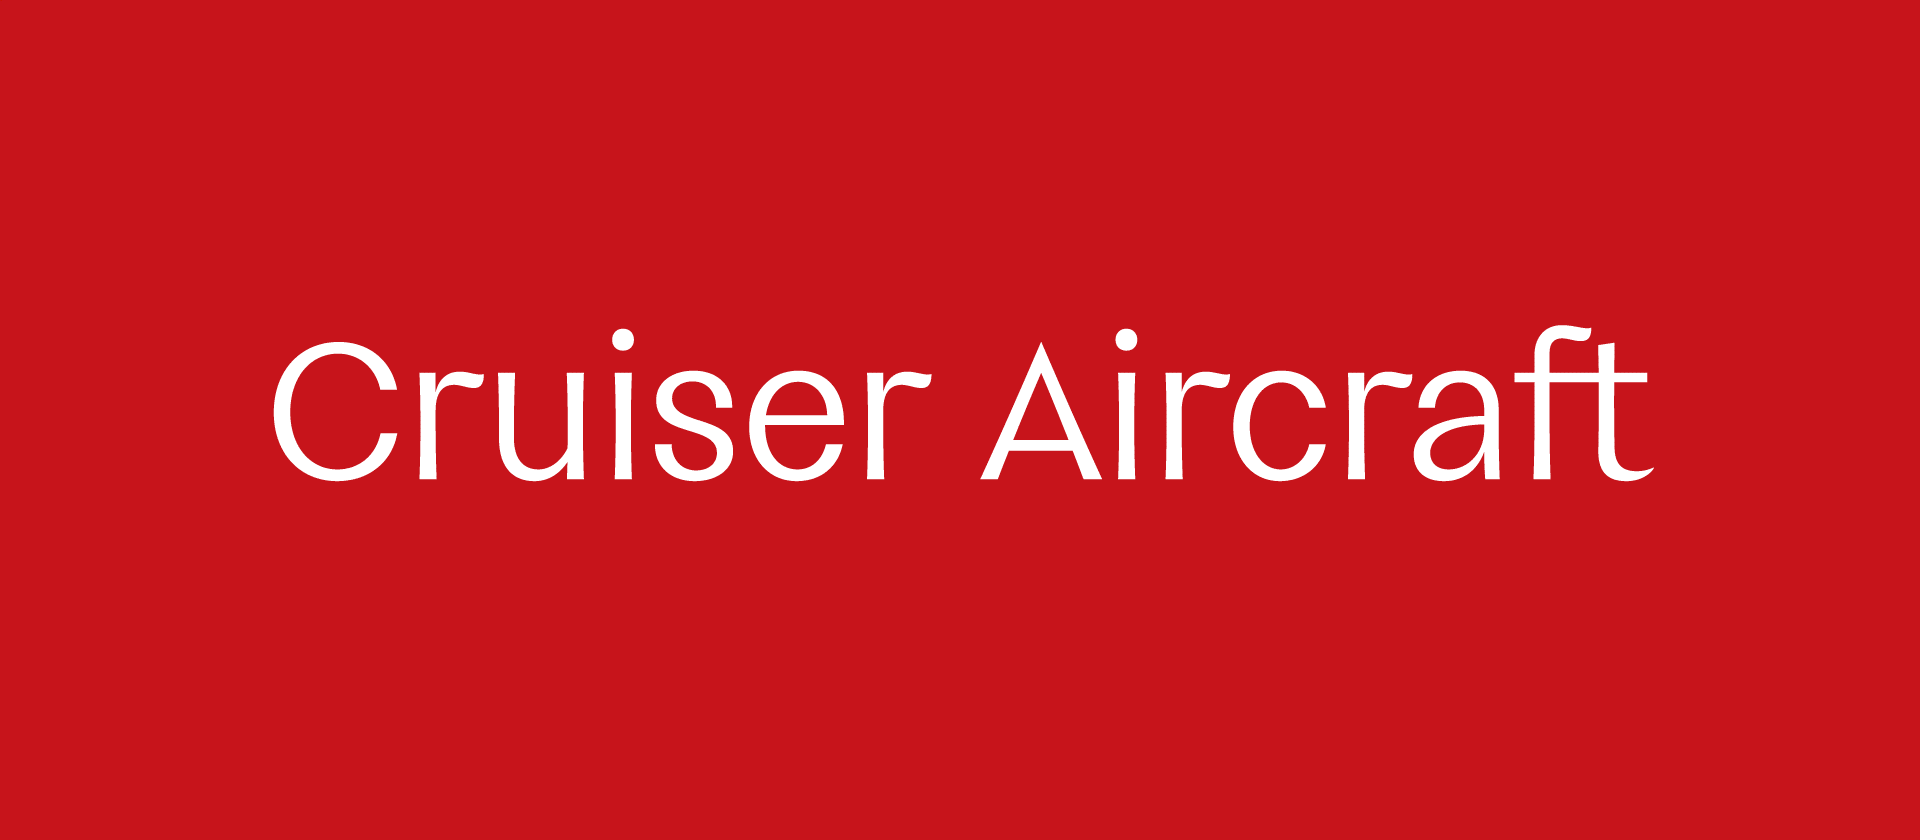 Custom Fonts: Cruiser Aircraft